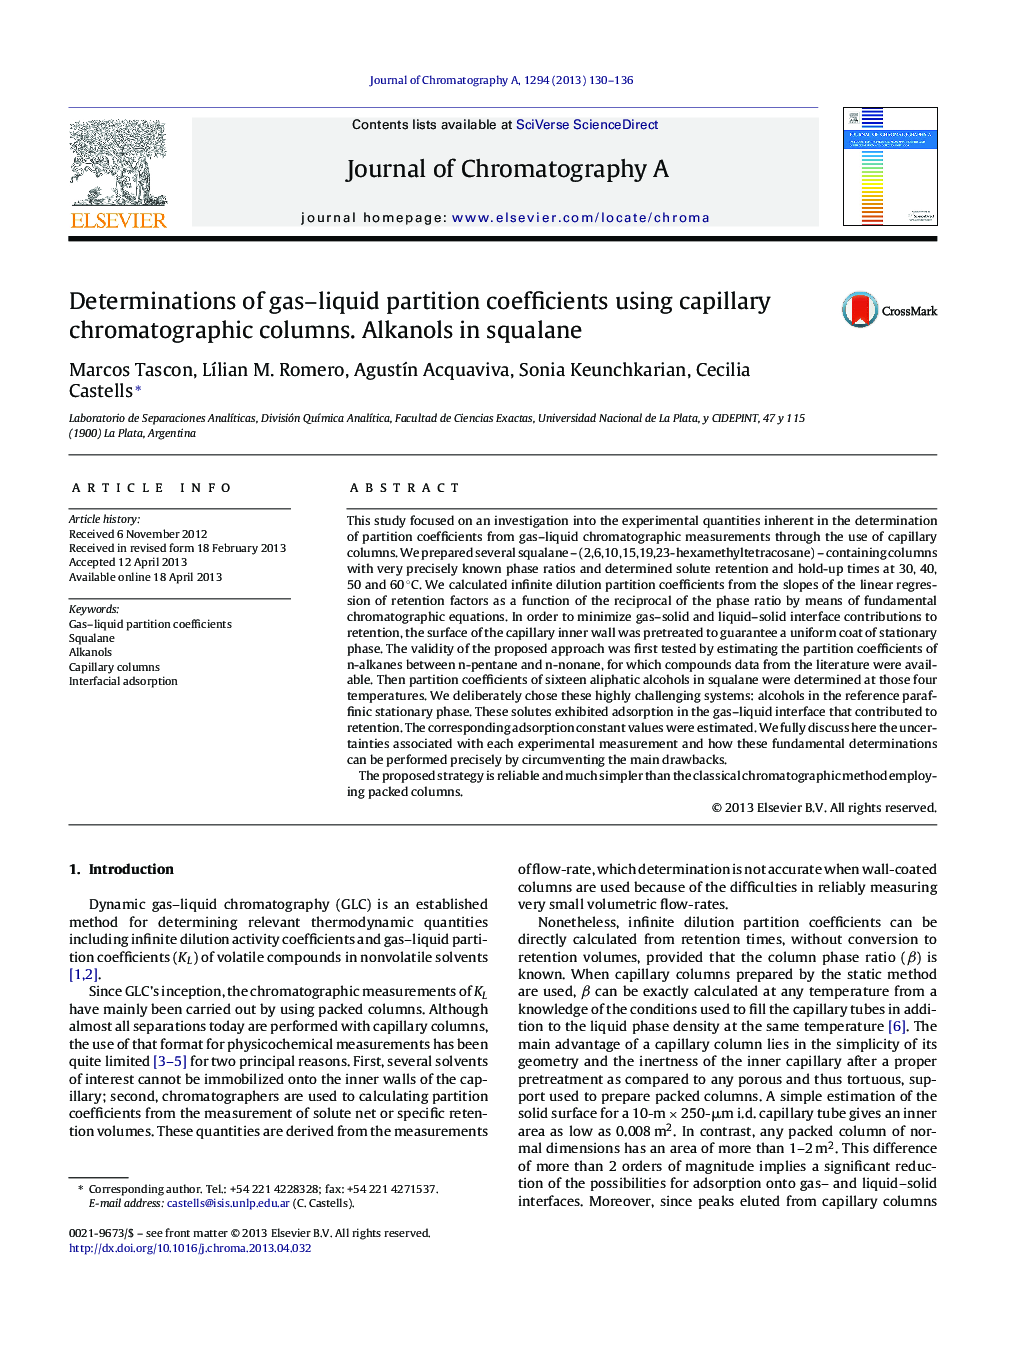 Determinations of gas–liquid partition coefficients using capillary chromatographic columns. Alkanols in squalane